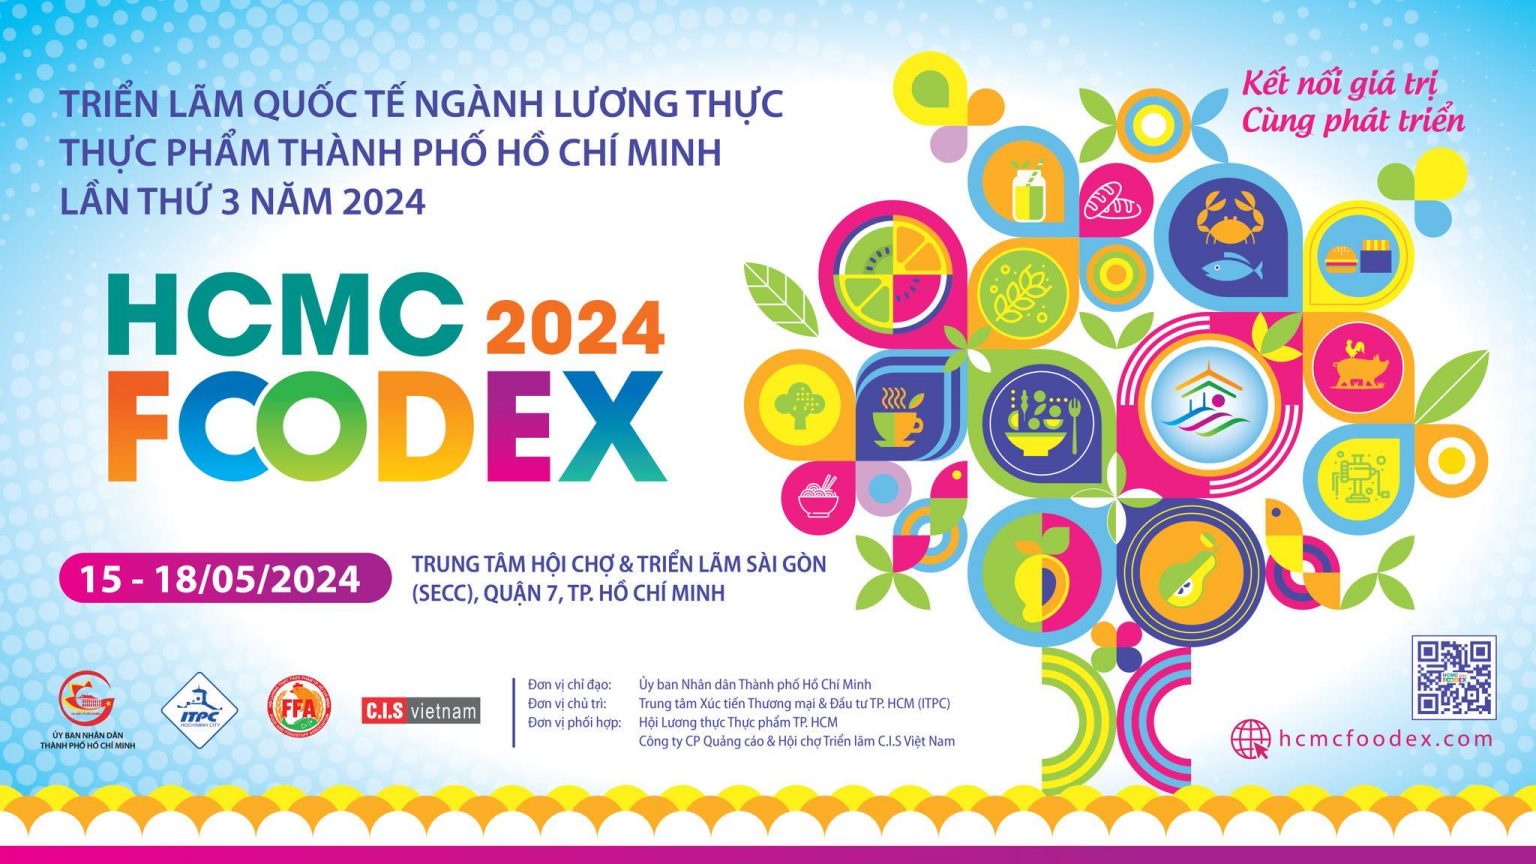 S5 SÀI GÒN THAM GIA TRIỂN LÃM HCMC FOODEX 2024